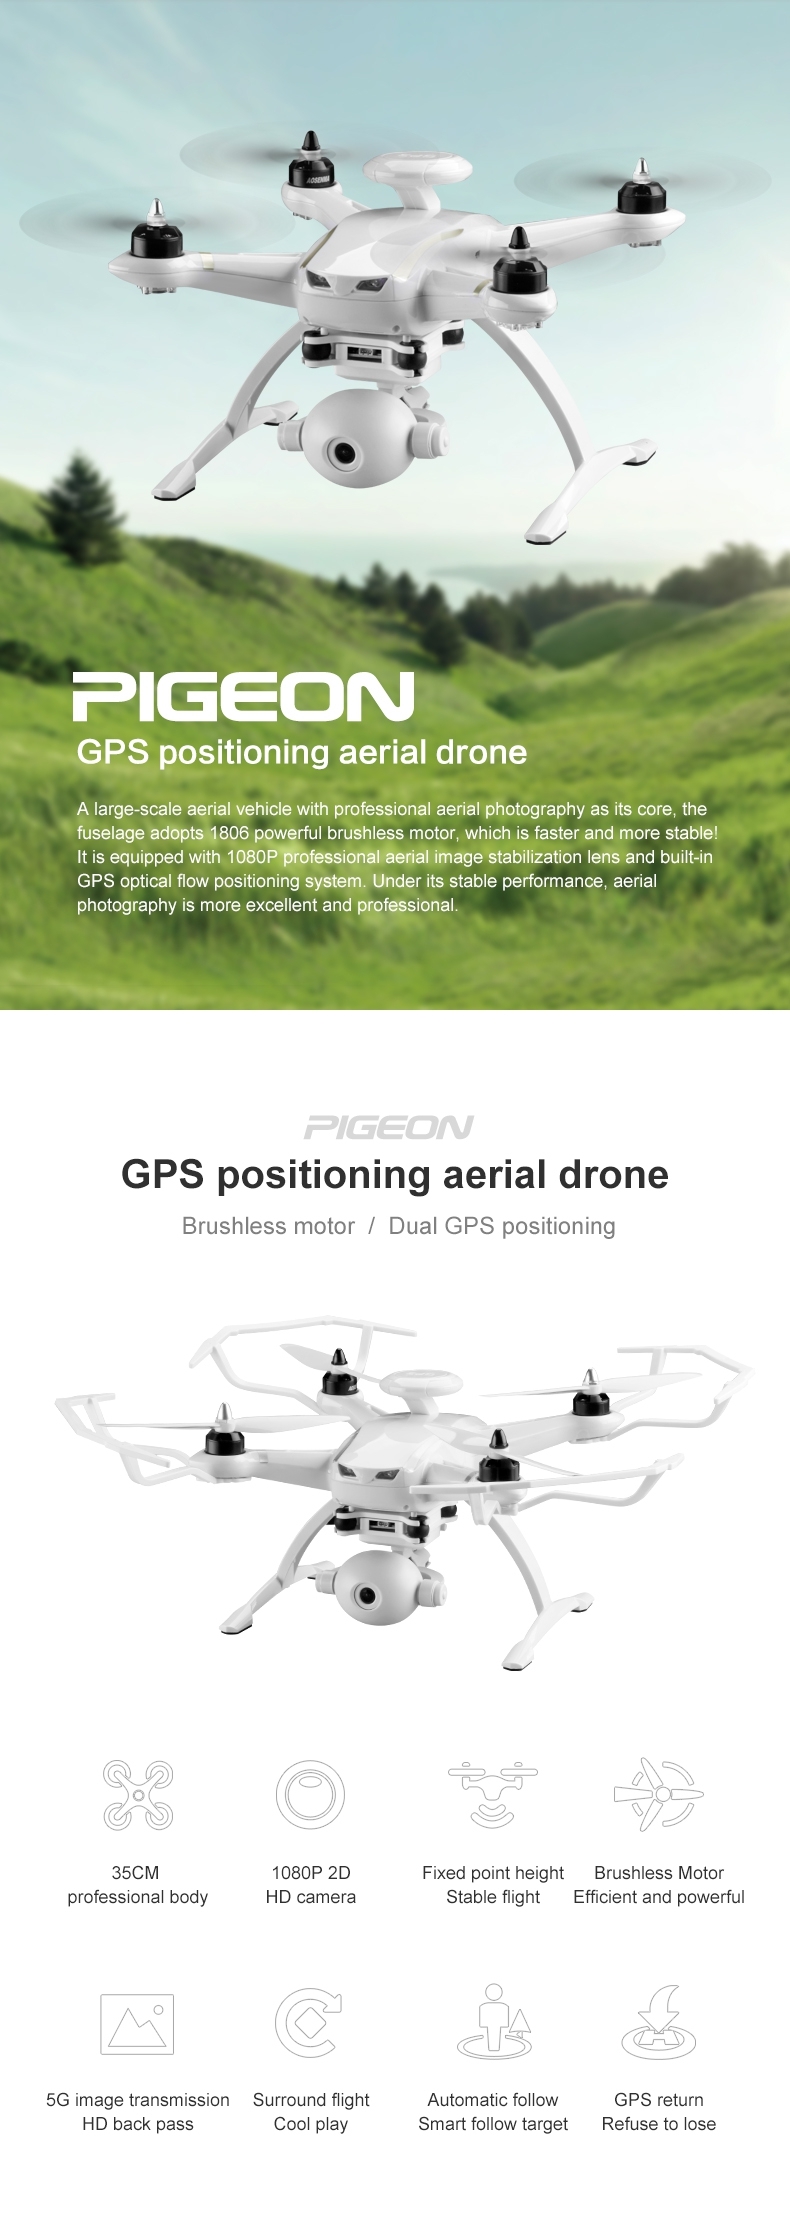 AOSENMA CG035 GPS 5G WiFi FPV with 1080P HD Camera 2D Gimbal RC Drone Quadcopter RTF